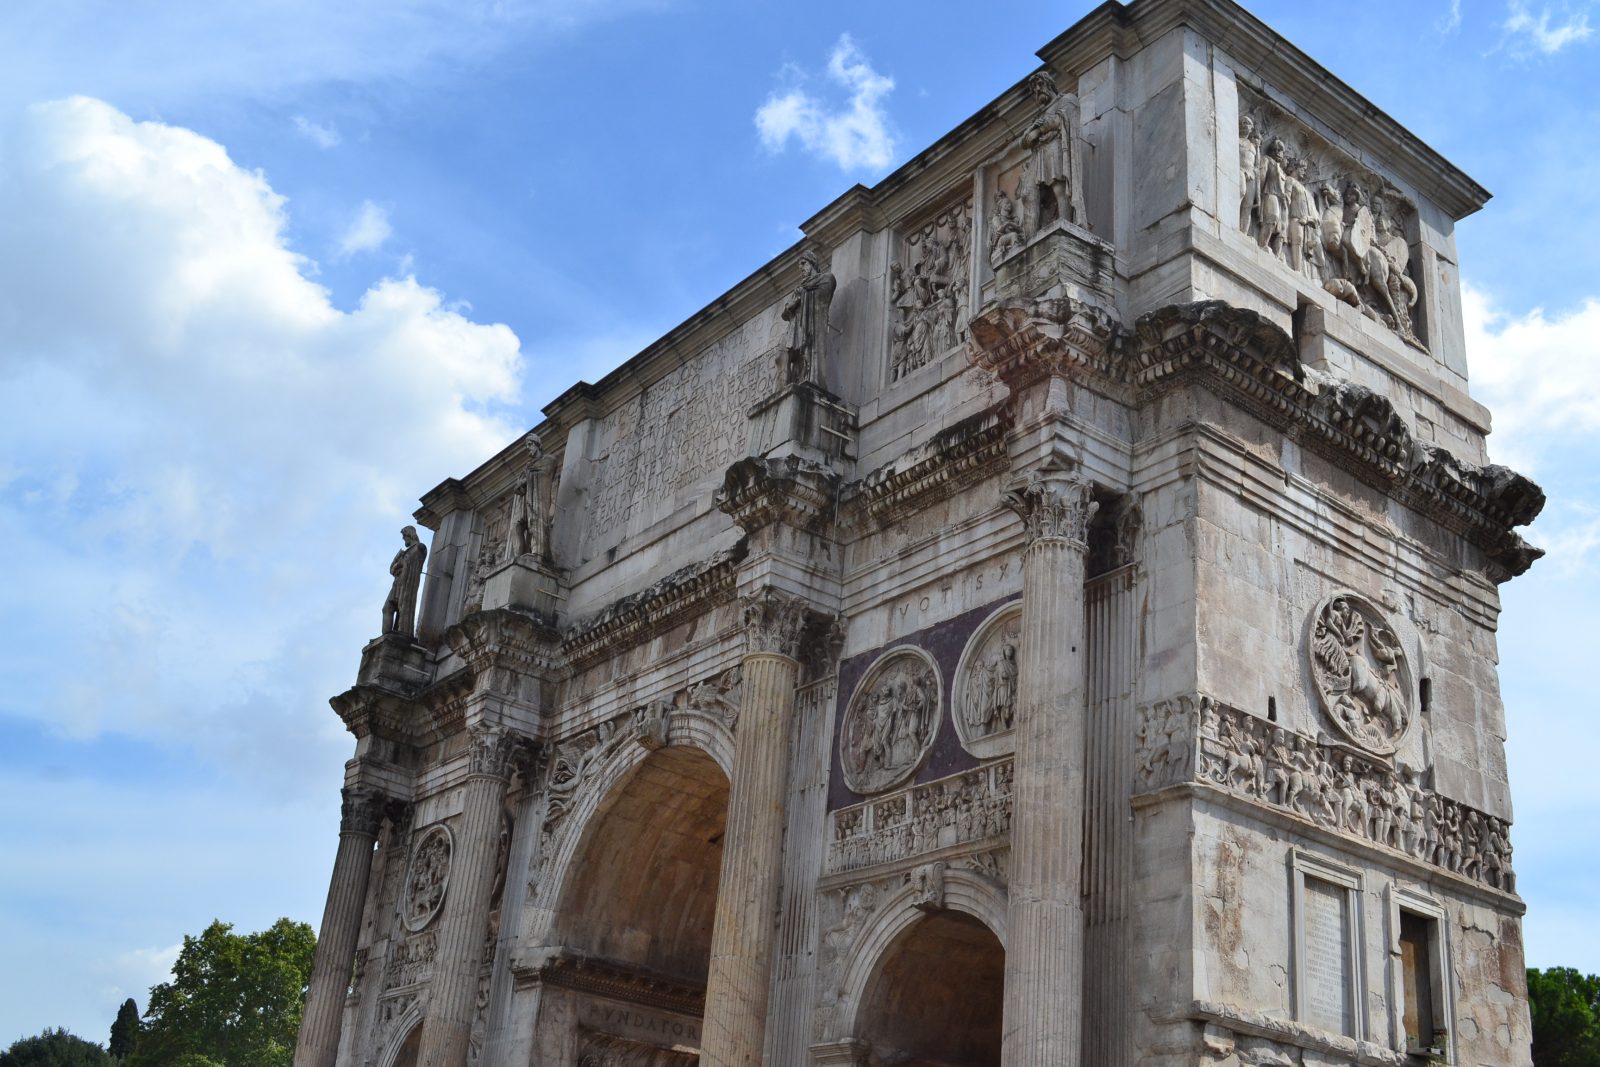 arco de constantino, o mais recente e mais conservado arco da época dos imperadores romanos